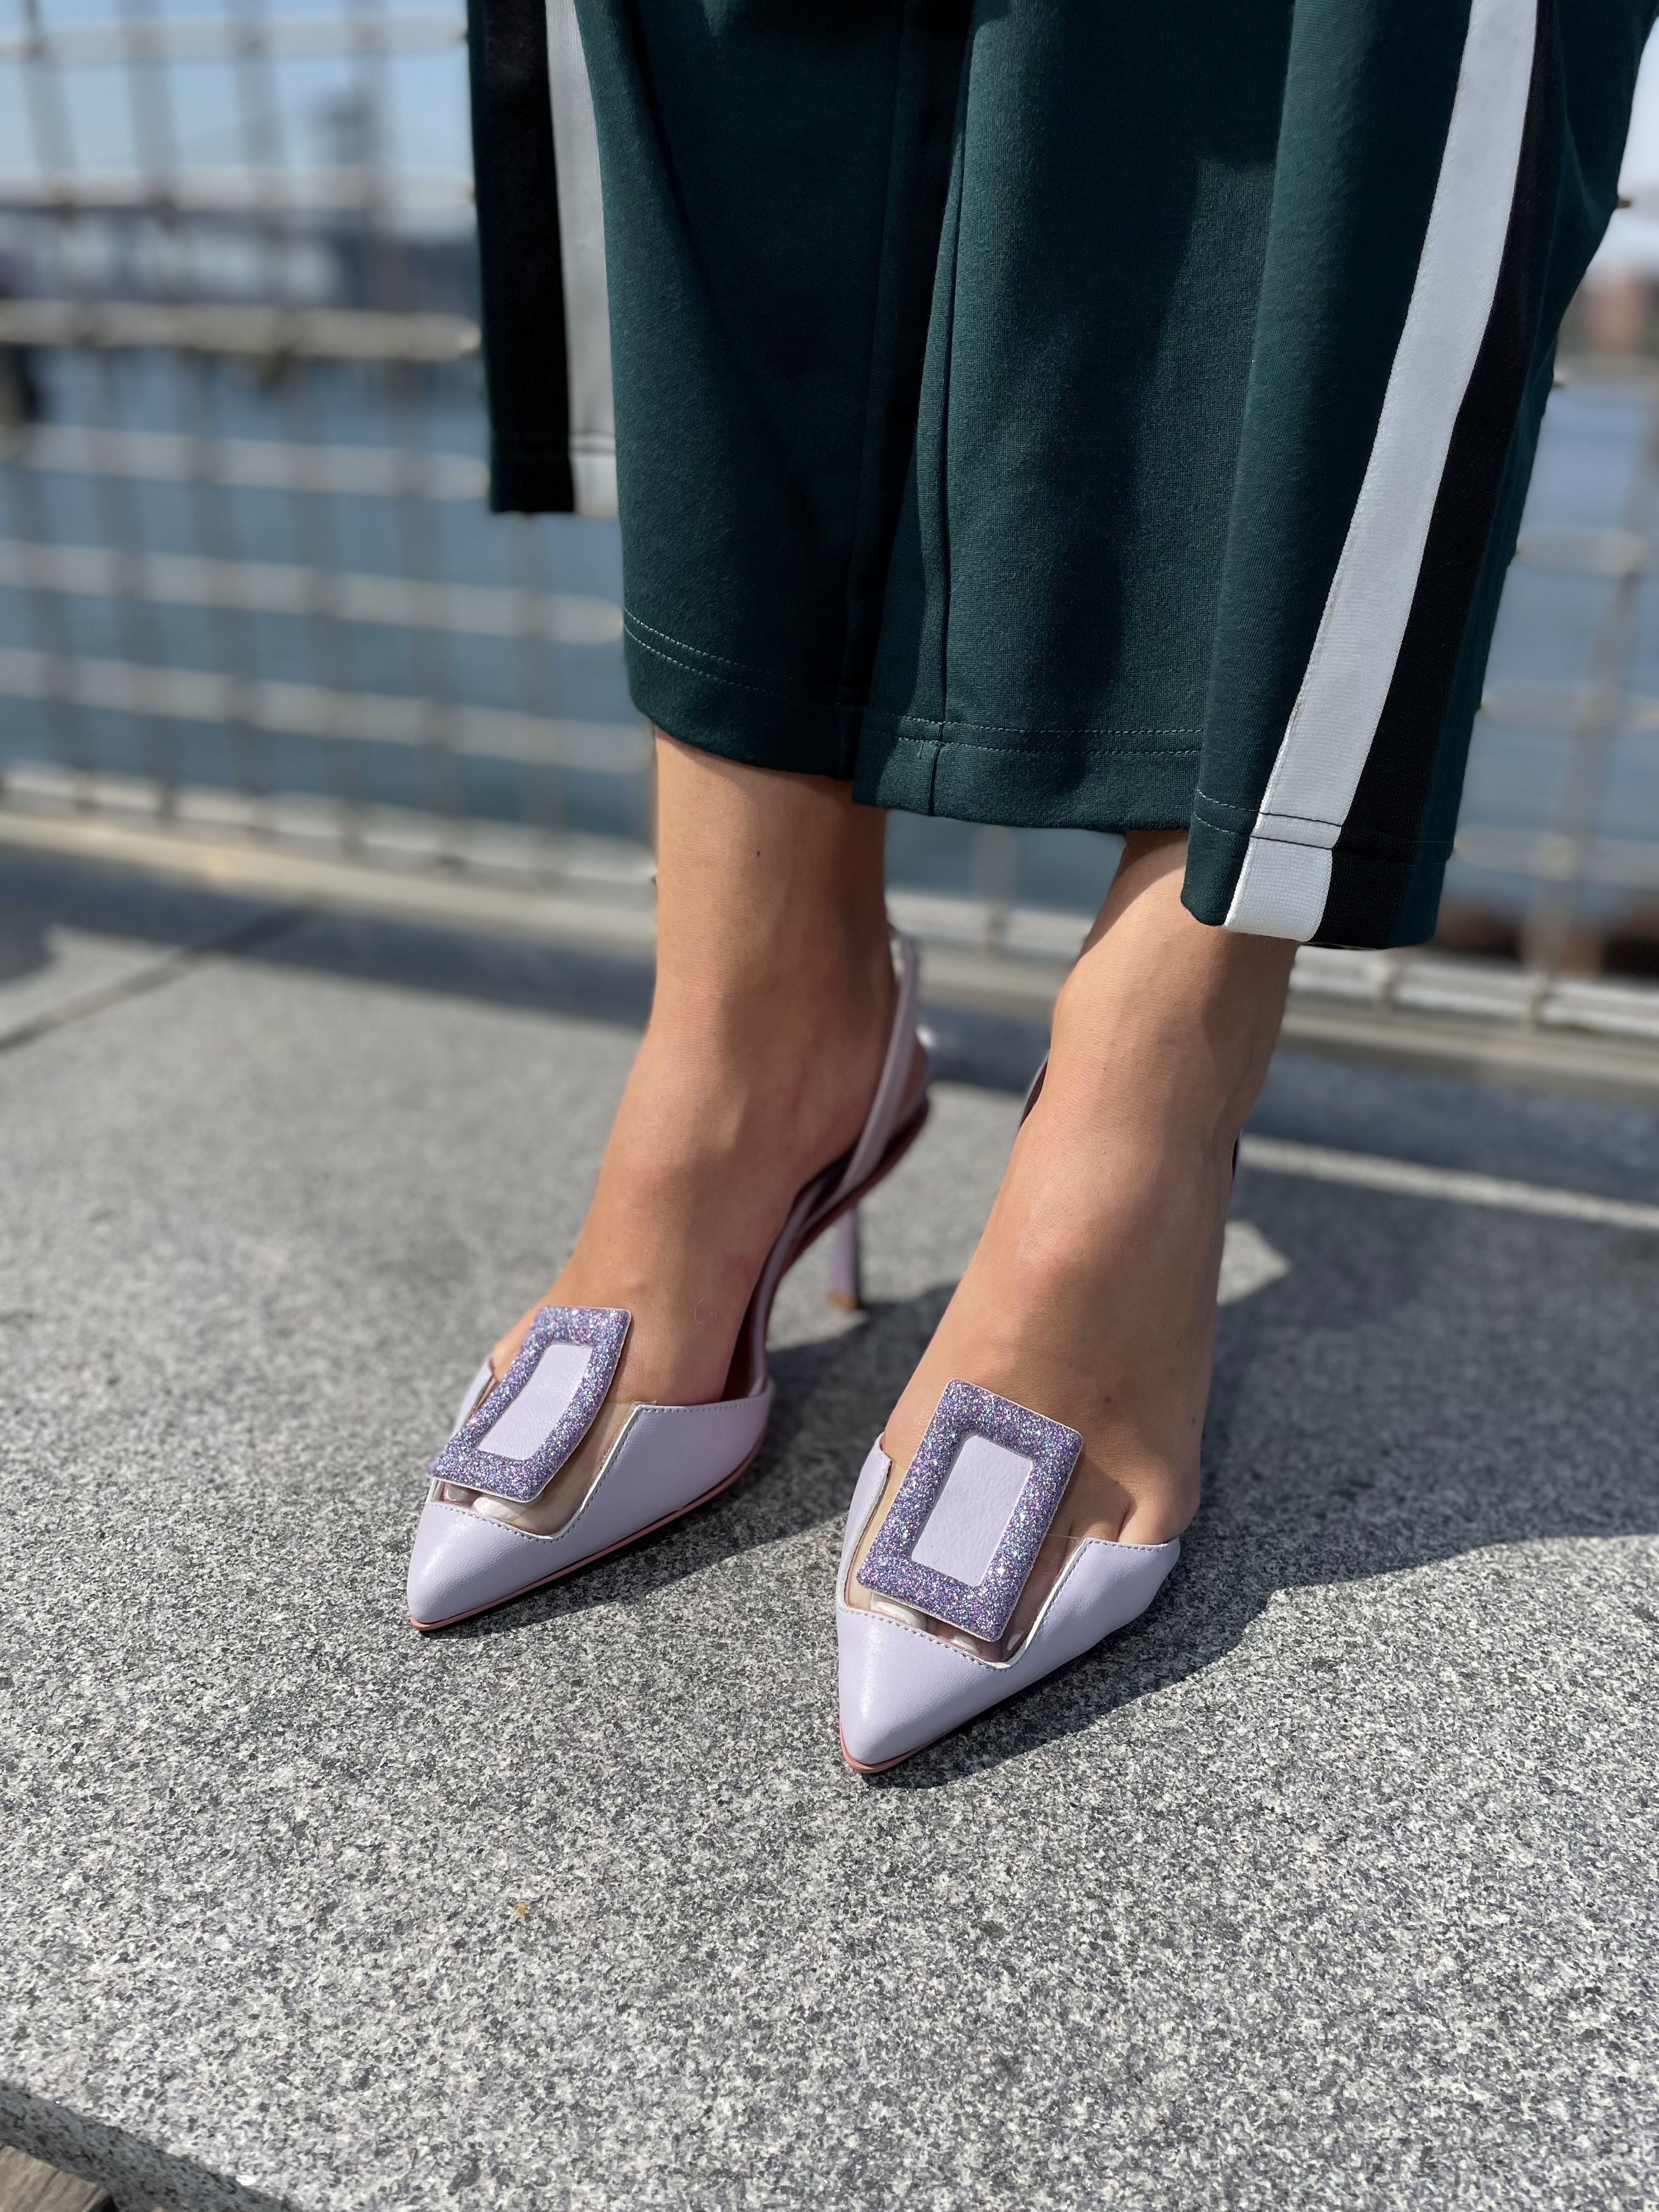 Outgeek High Heels Strap Adjustable 1 Pair Loose-Proof Detachable Fashion  Decorative Shoes Ankle Strap Shoes Belt Strap : Amazon.in: Shoes & Handbags